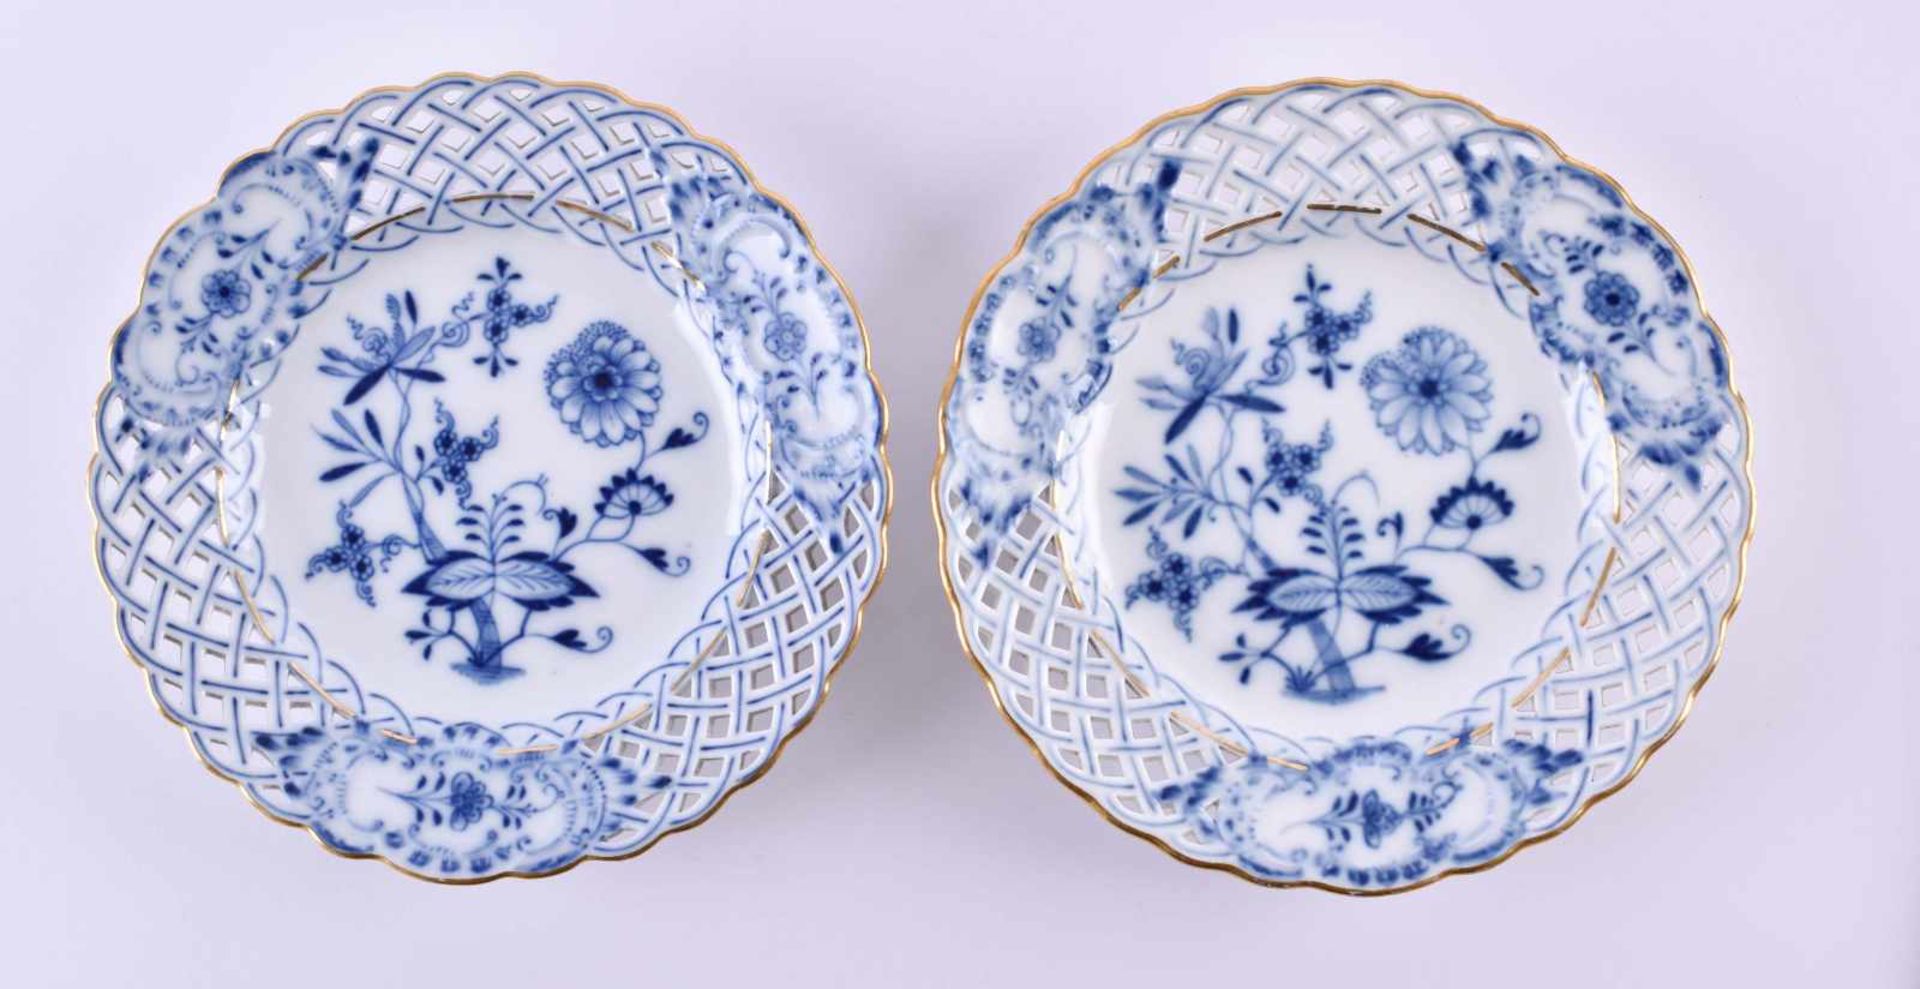 Pair of Meissen plates, 18th / 19th century